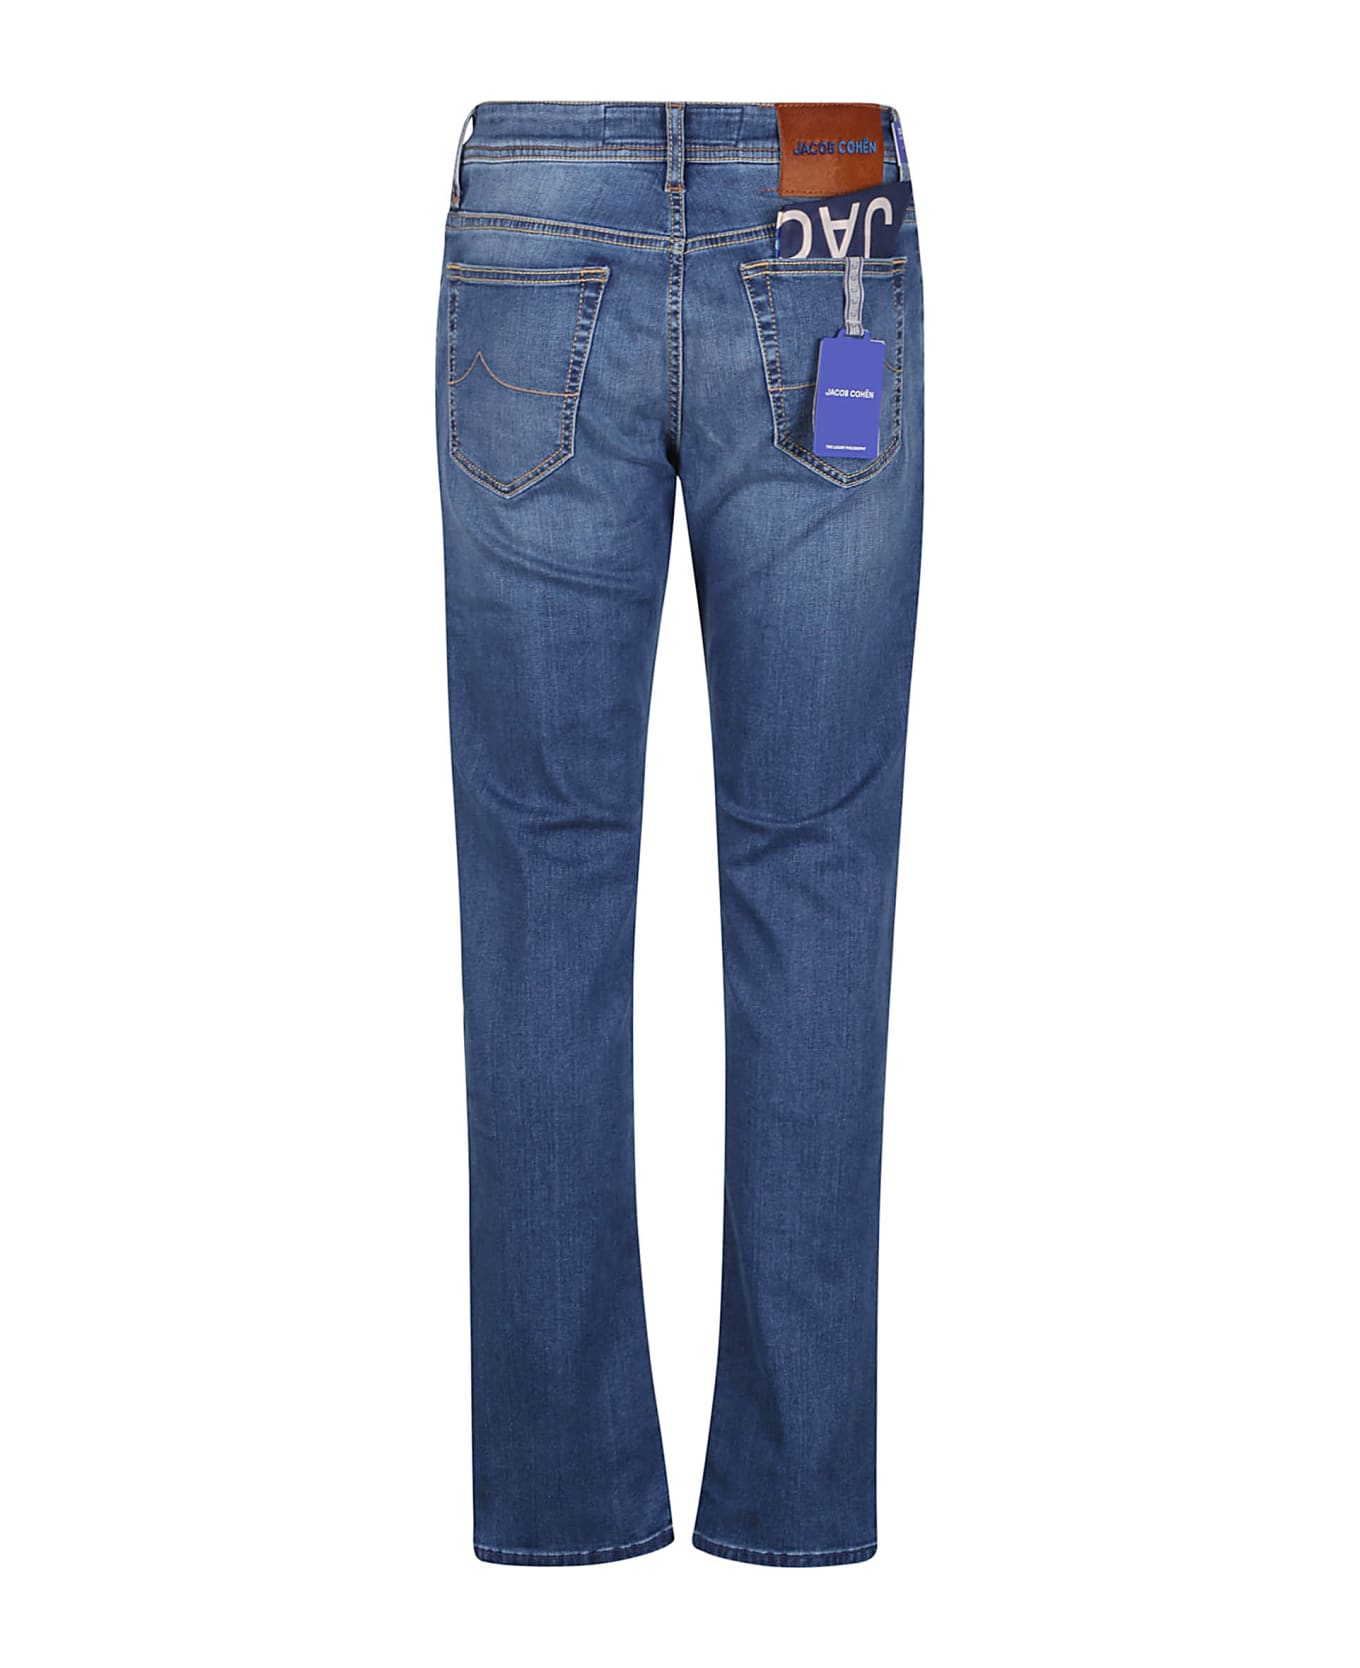 Jacob Cohen 5 Pocket Jeans Slim Fit Bard Fast - D Blu ボトムス